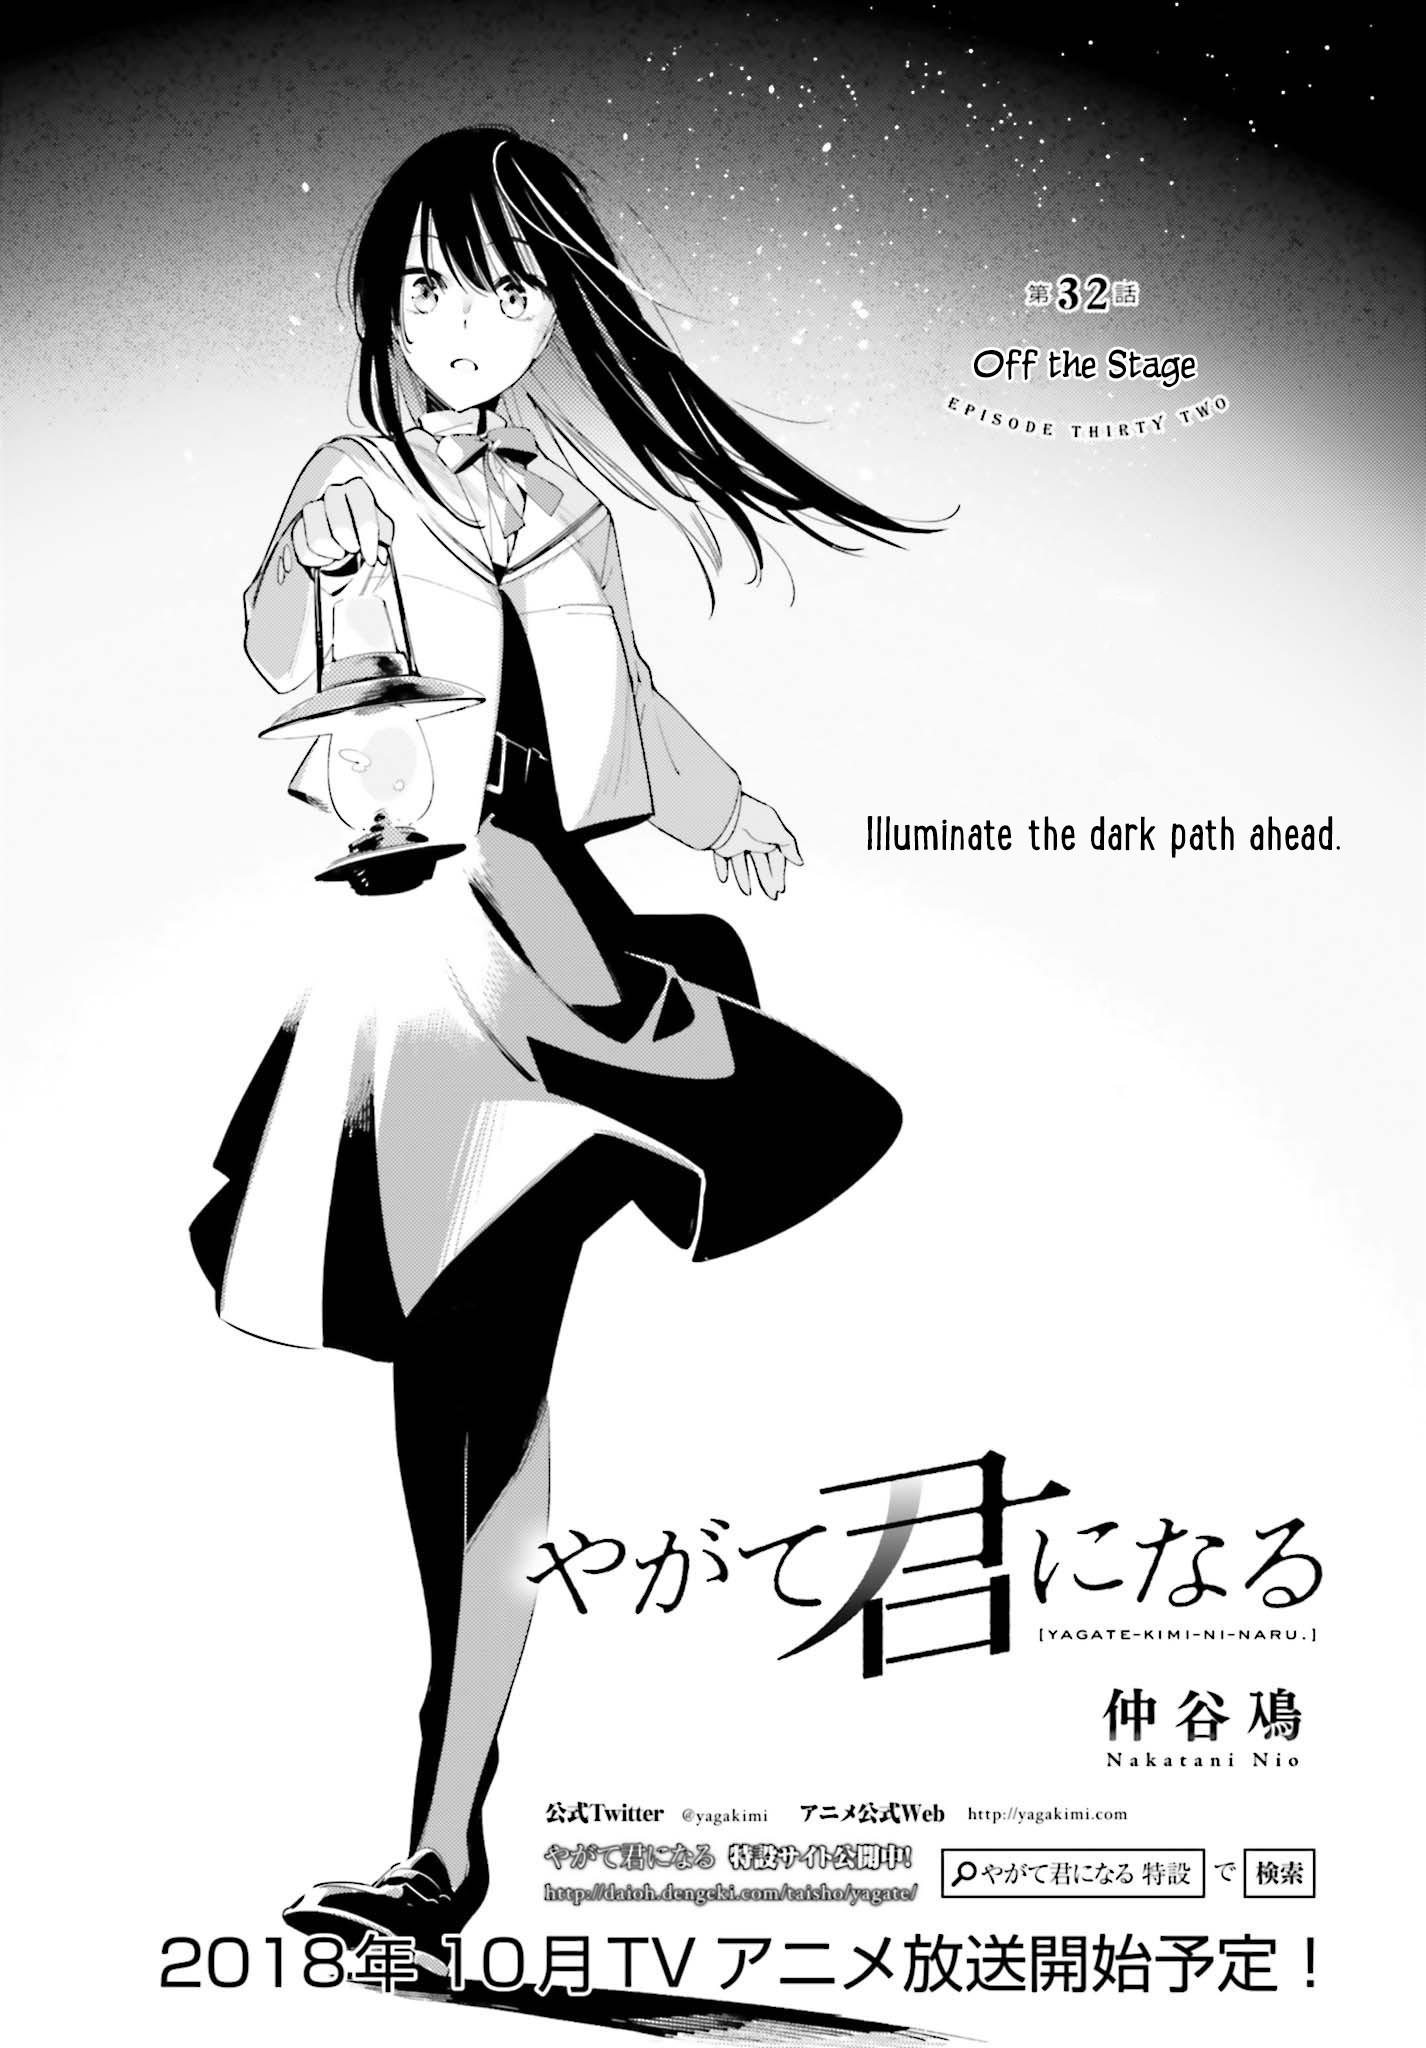 Read Yagate Kimi Ni Naru Vol.4 Chapter 19 V2 : Mirage on Mangakakalot